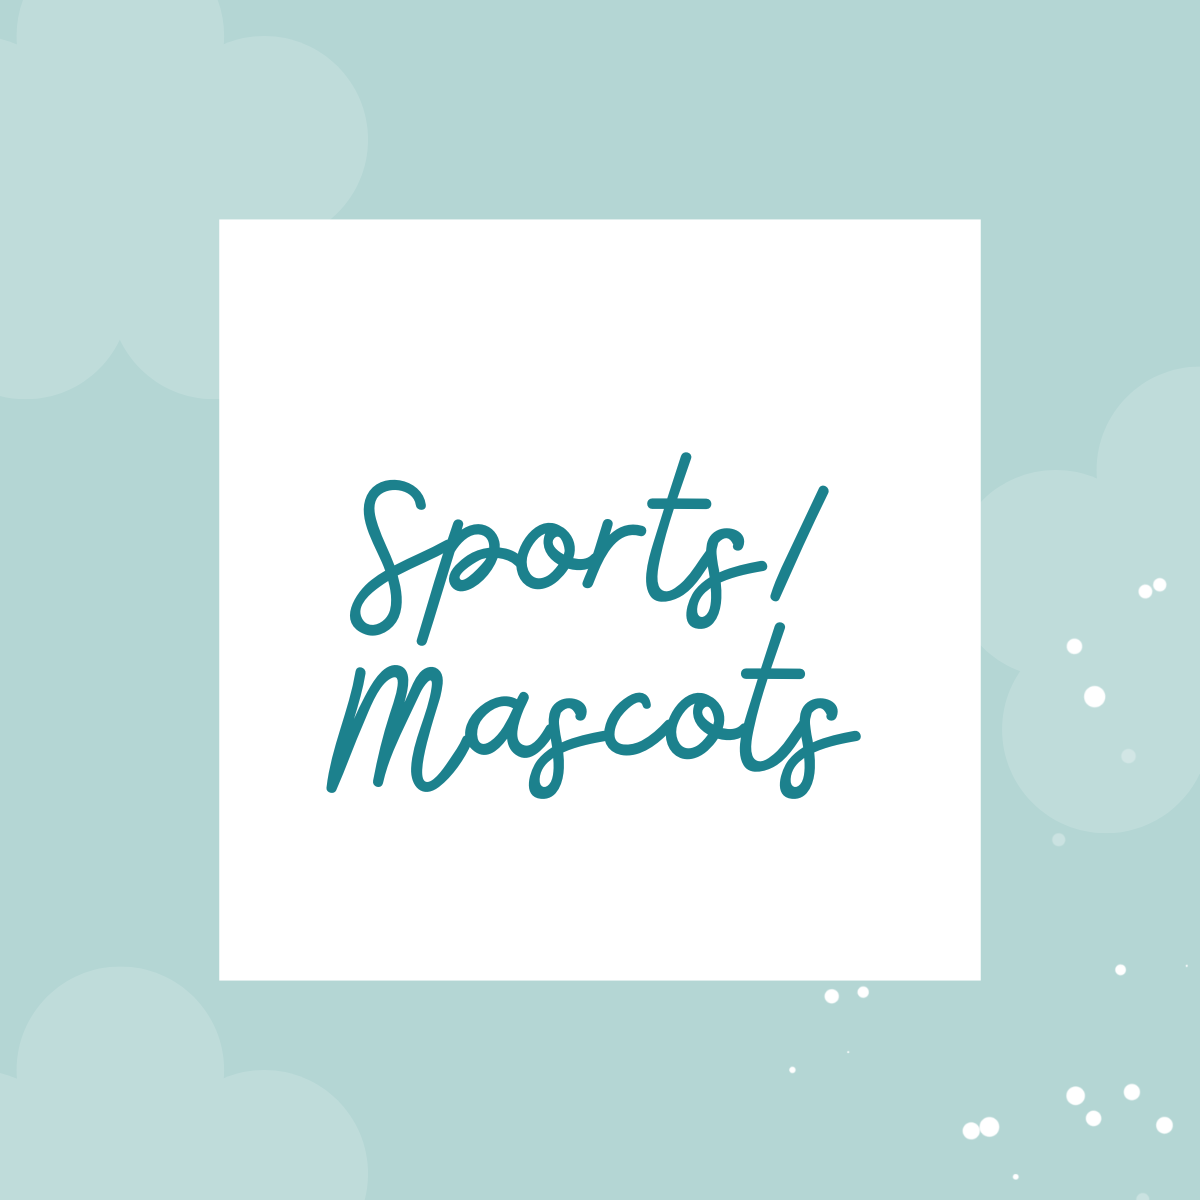 Sports/Mascots